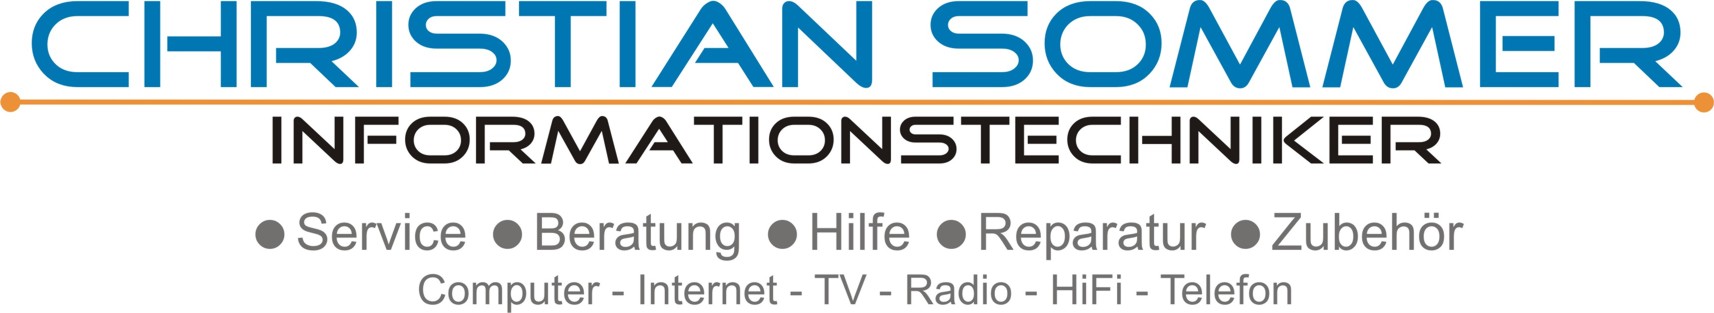 Logo - Christian Sommer - Informationstechniker - Service Beratung Hilfe Zubehör Webdesign Computer Internet TV Radio HiFi